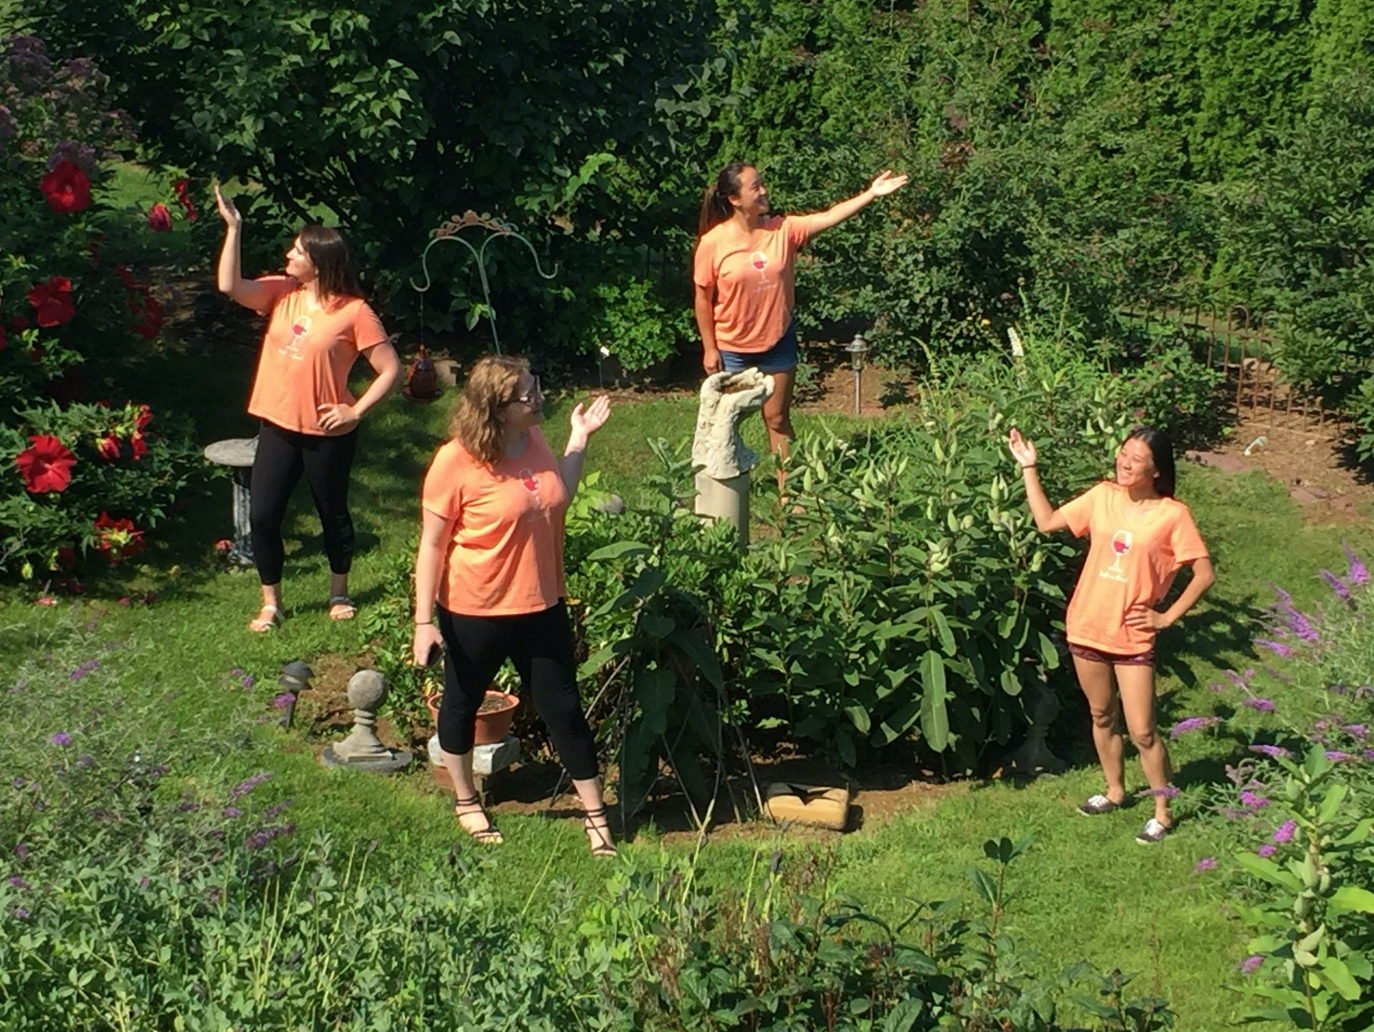 Group of four young ladies in statue garden enjoying friends' retreat. Wearing matching orange tee shirts.